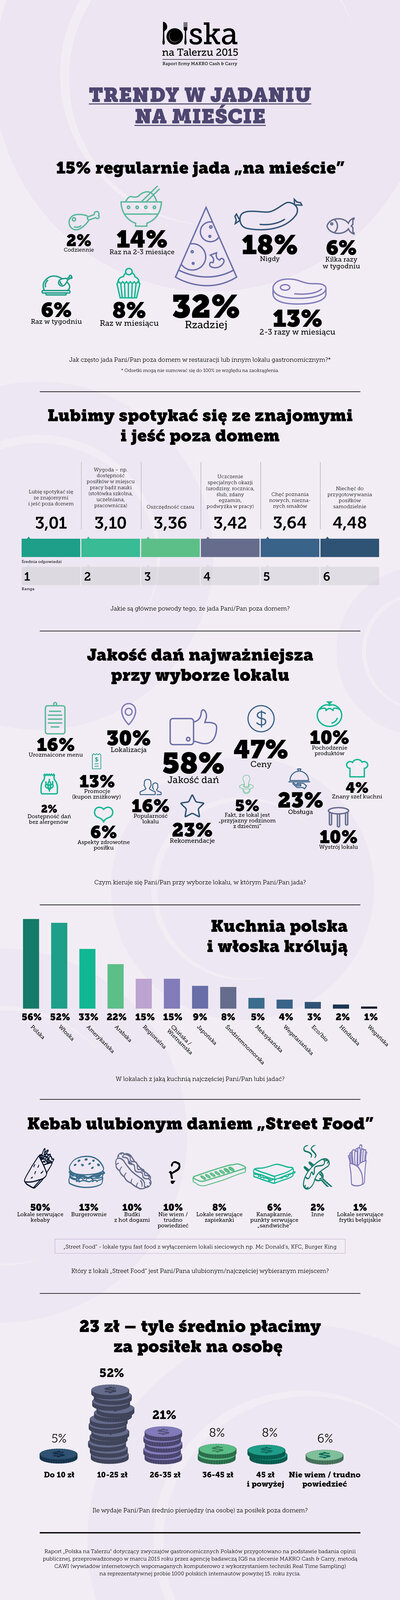 Polska na Talerzu 2015_Trendy w jadaniu na mieście.jpg